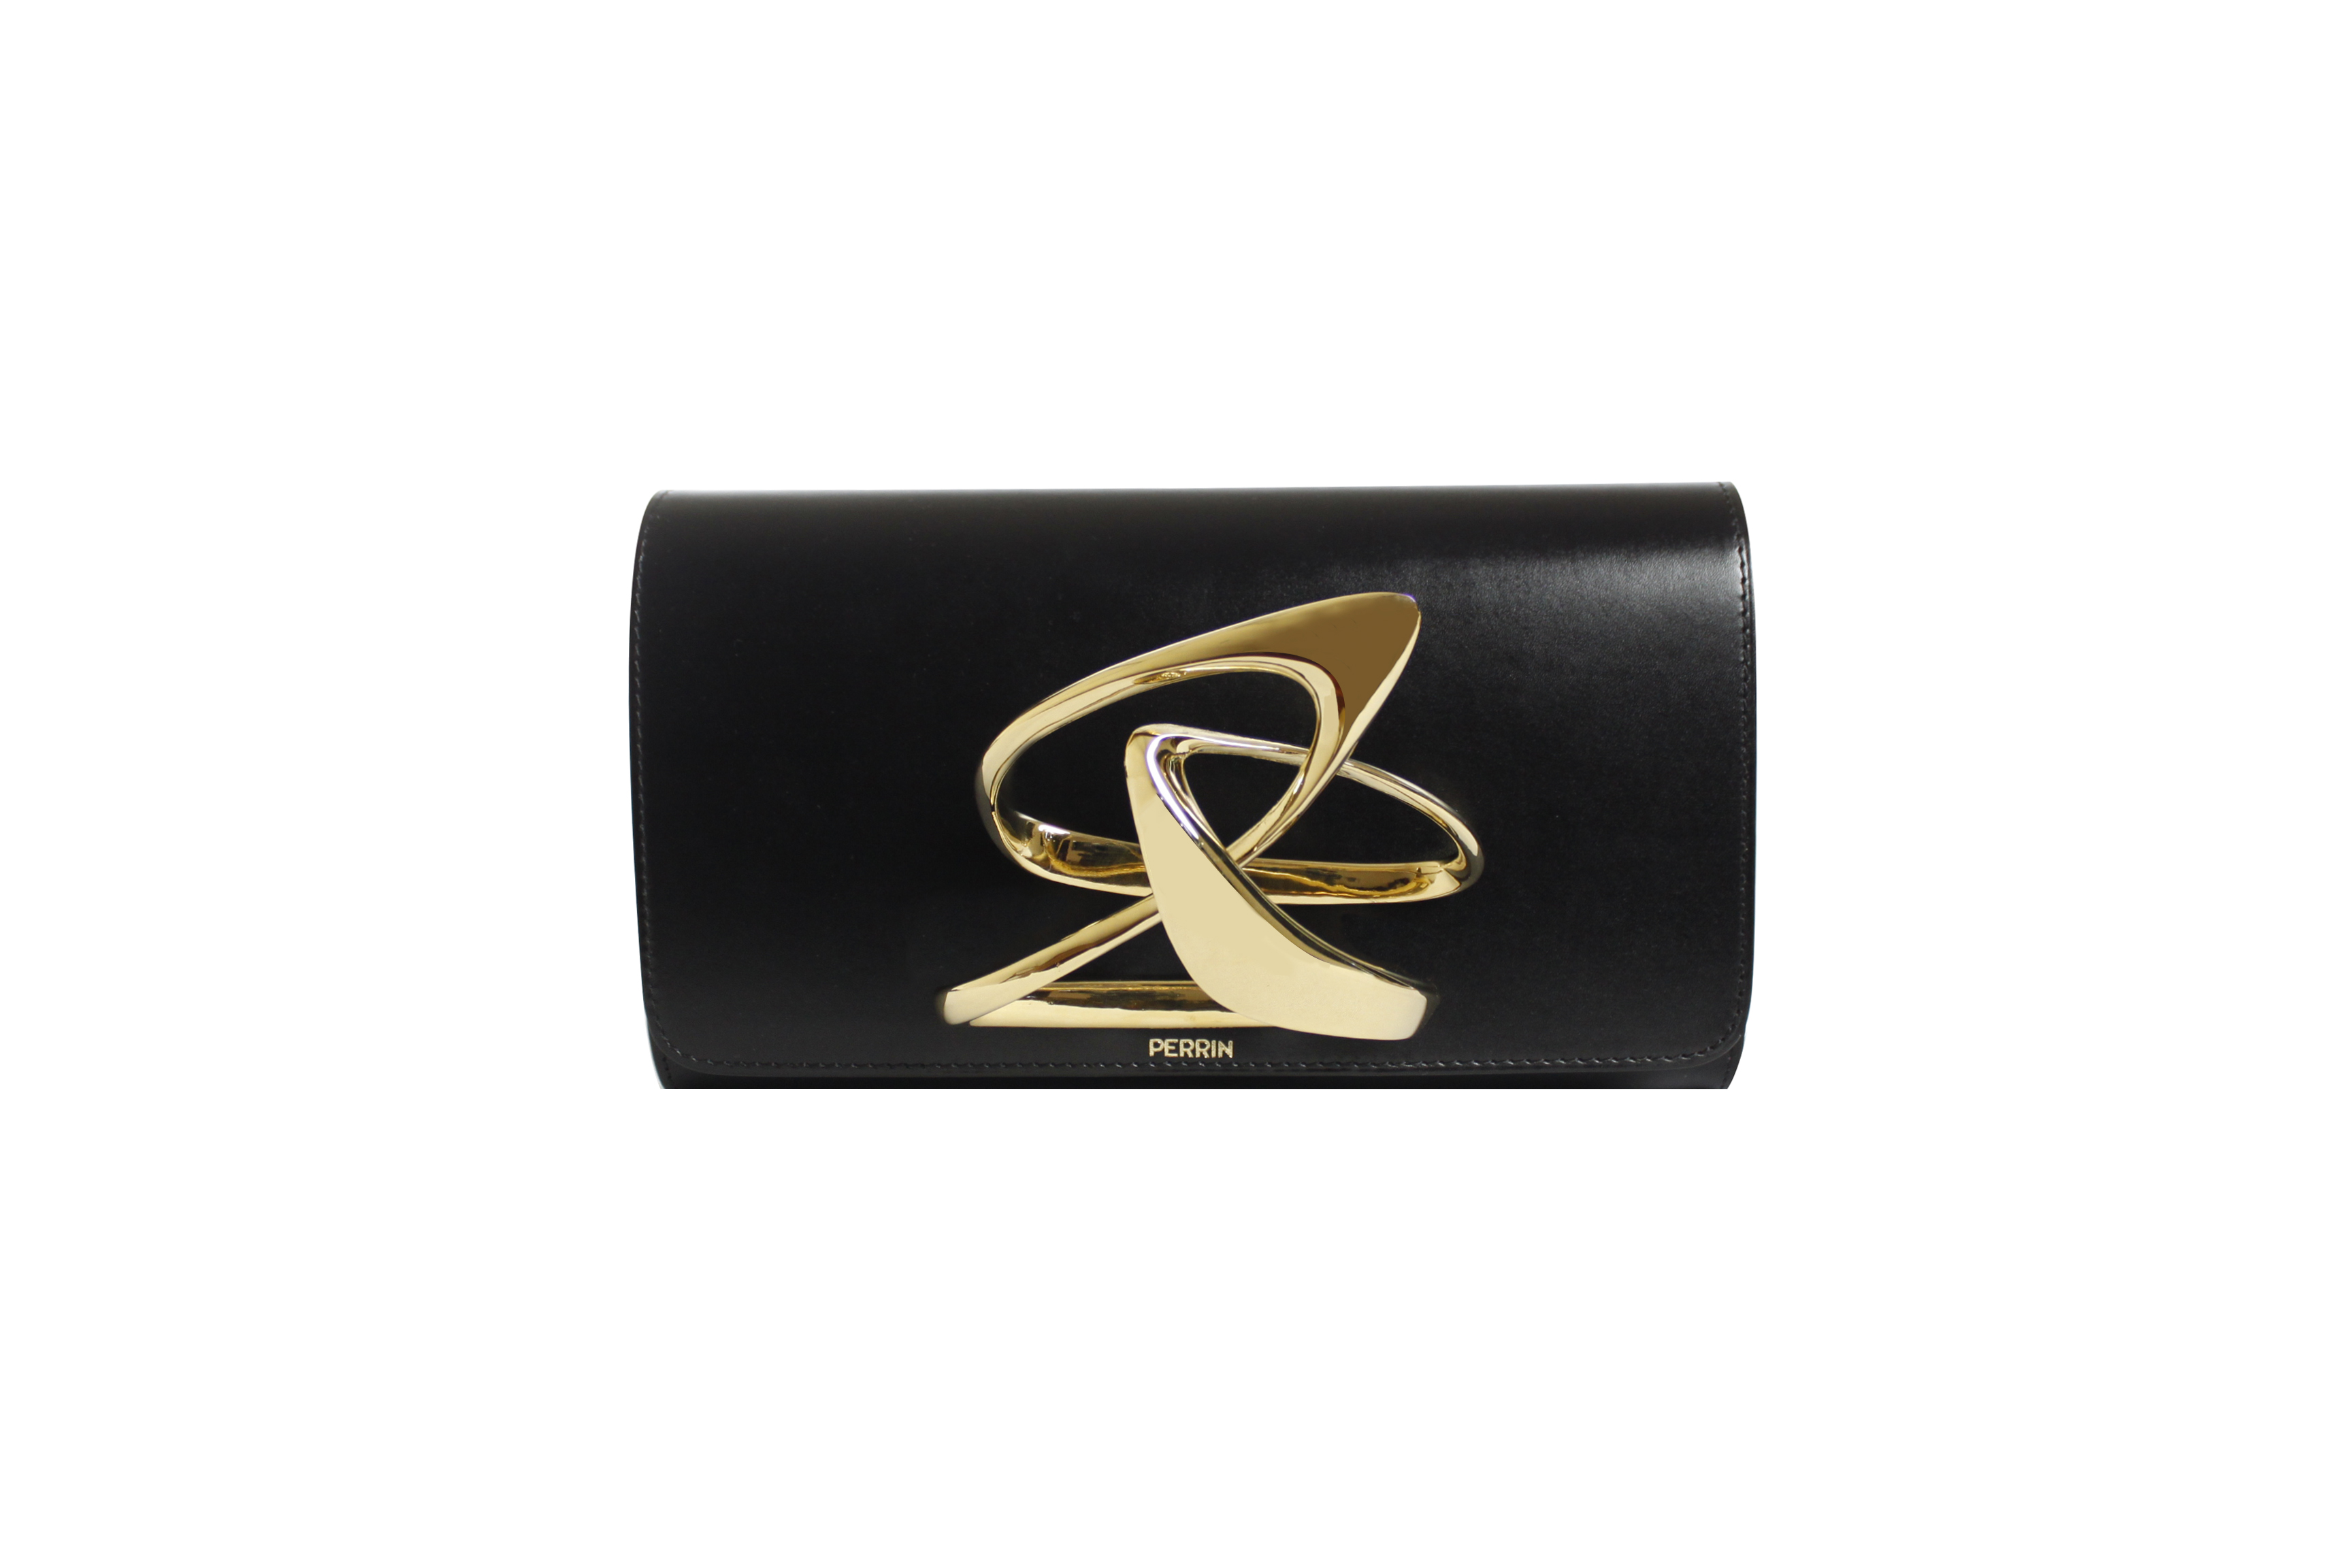 Perrin Paris x Zaha Hadid Strae clutch in black & gold